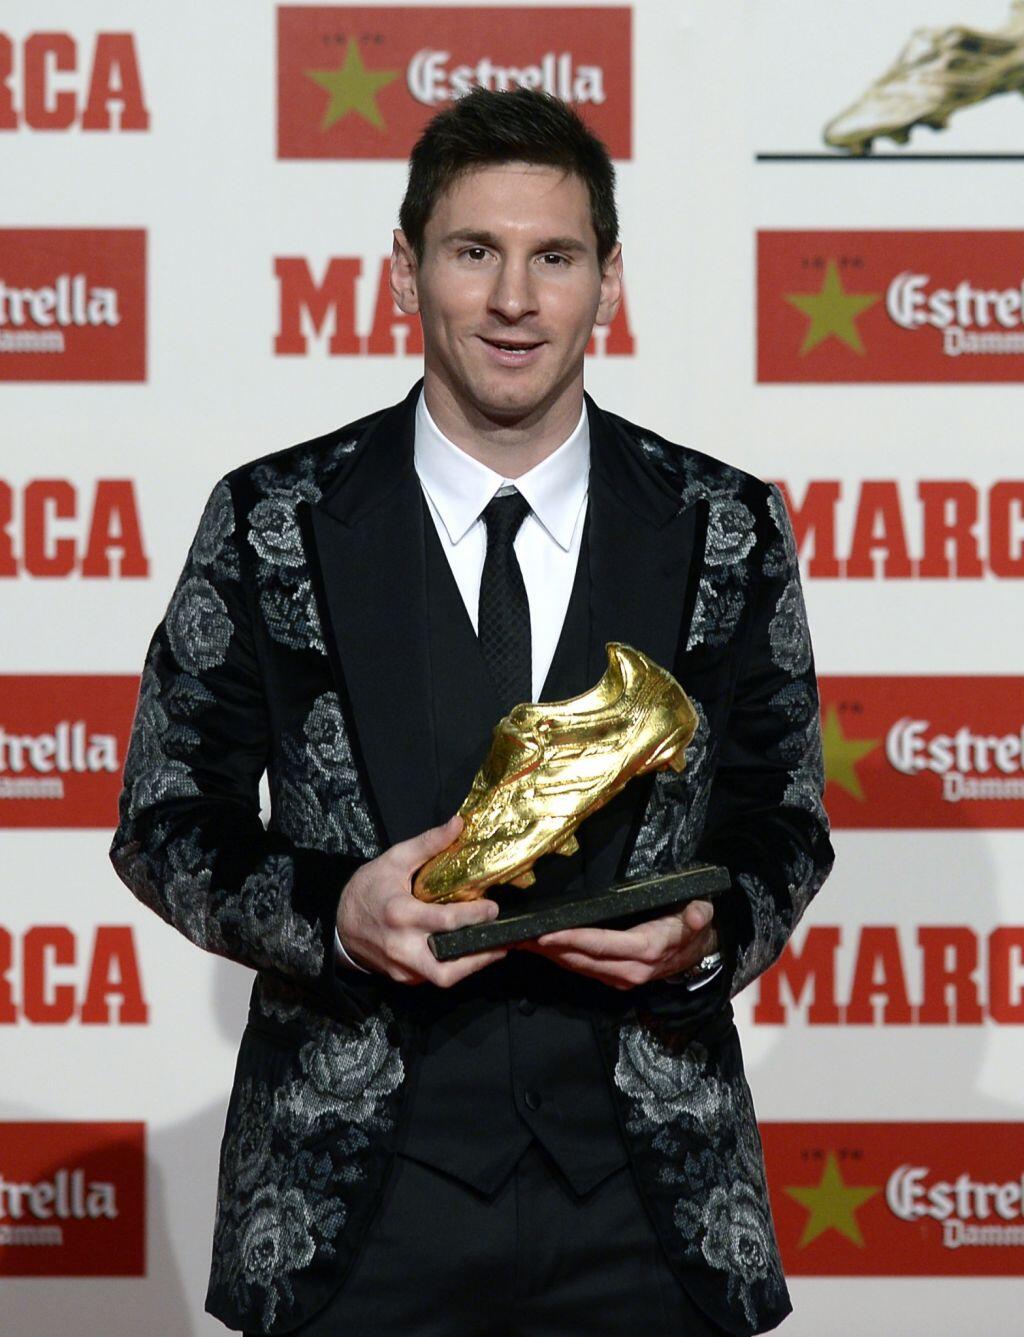 Leo-Messi-in-Dolce-Gabbana-Suit-Bota-de-Oro-Award-2013 | curl & glow